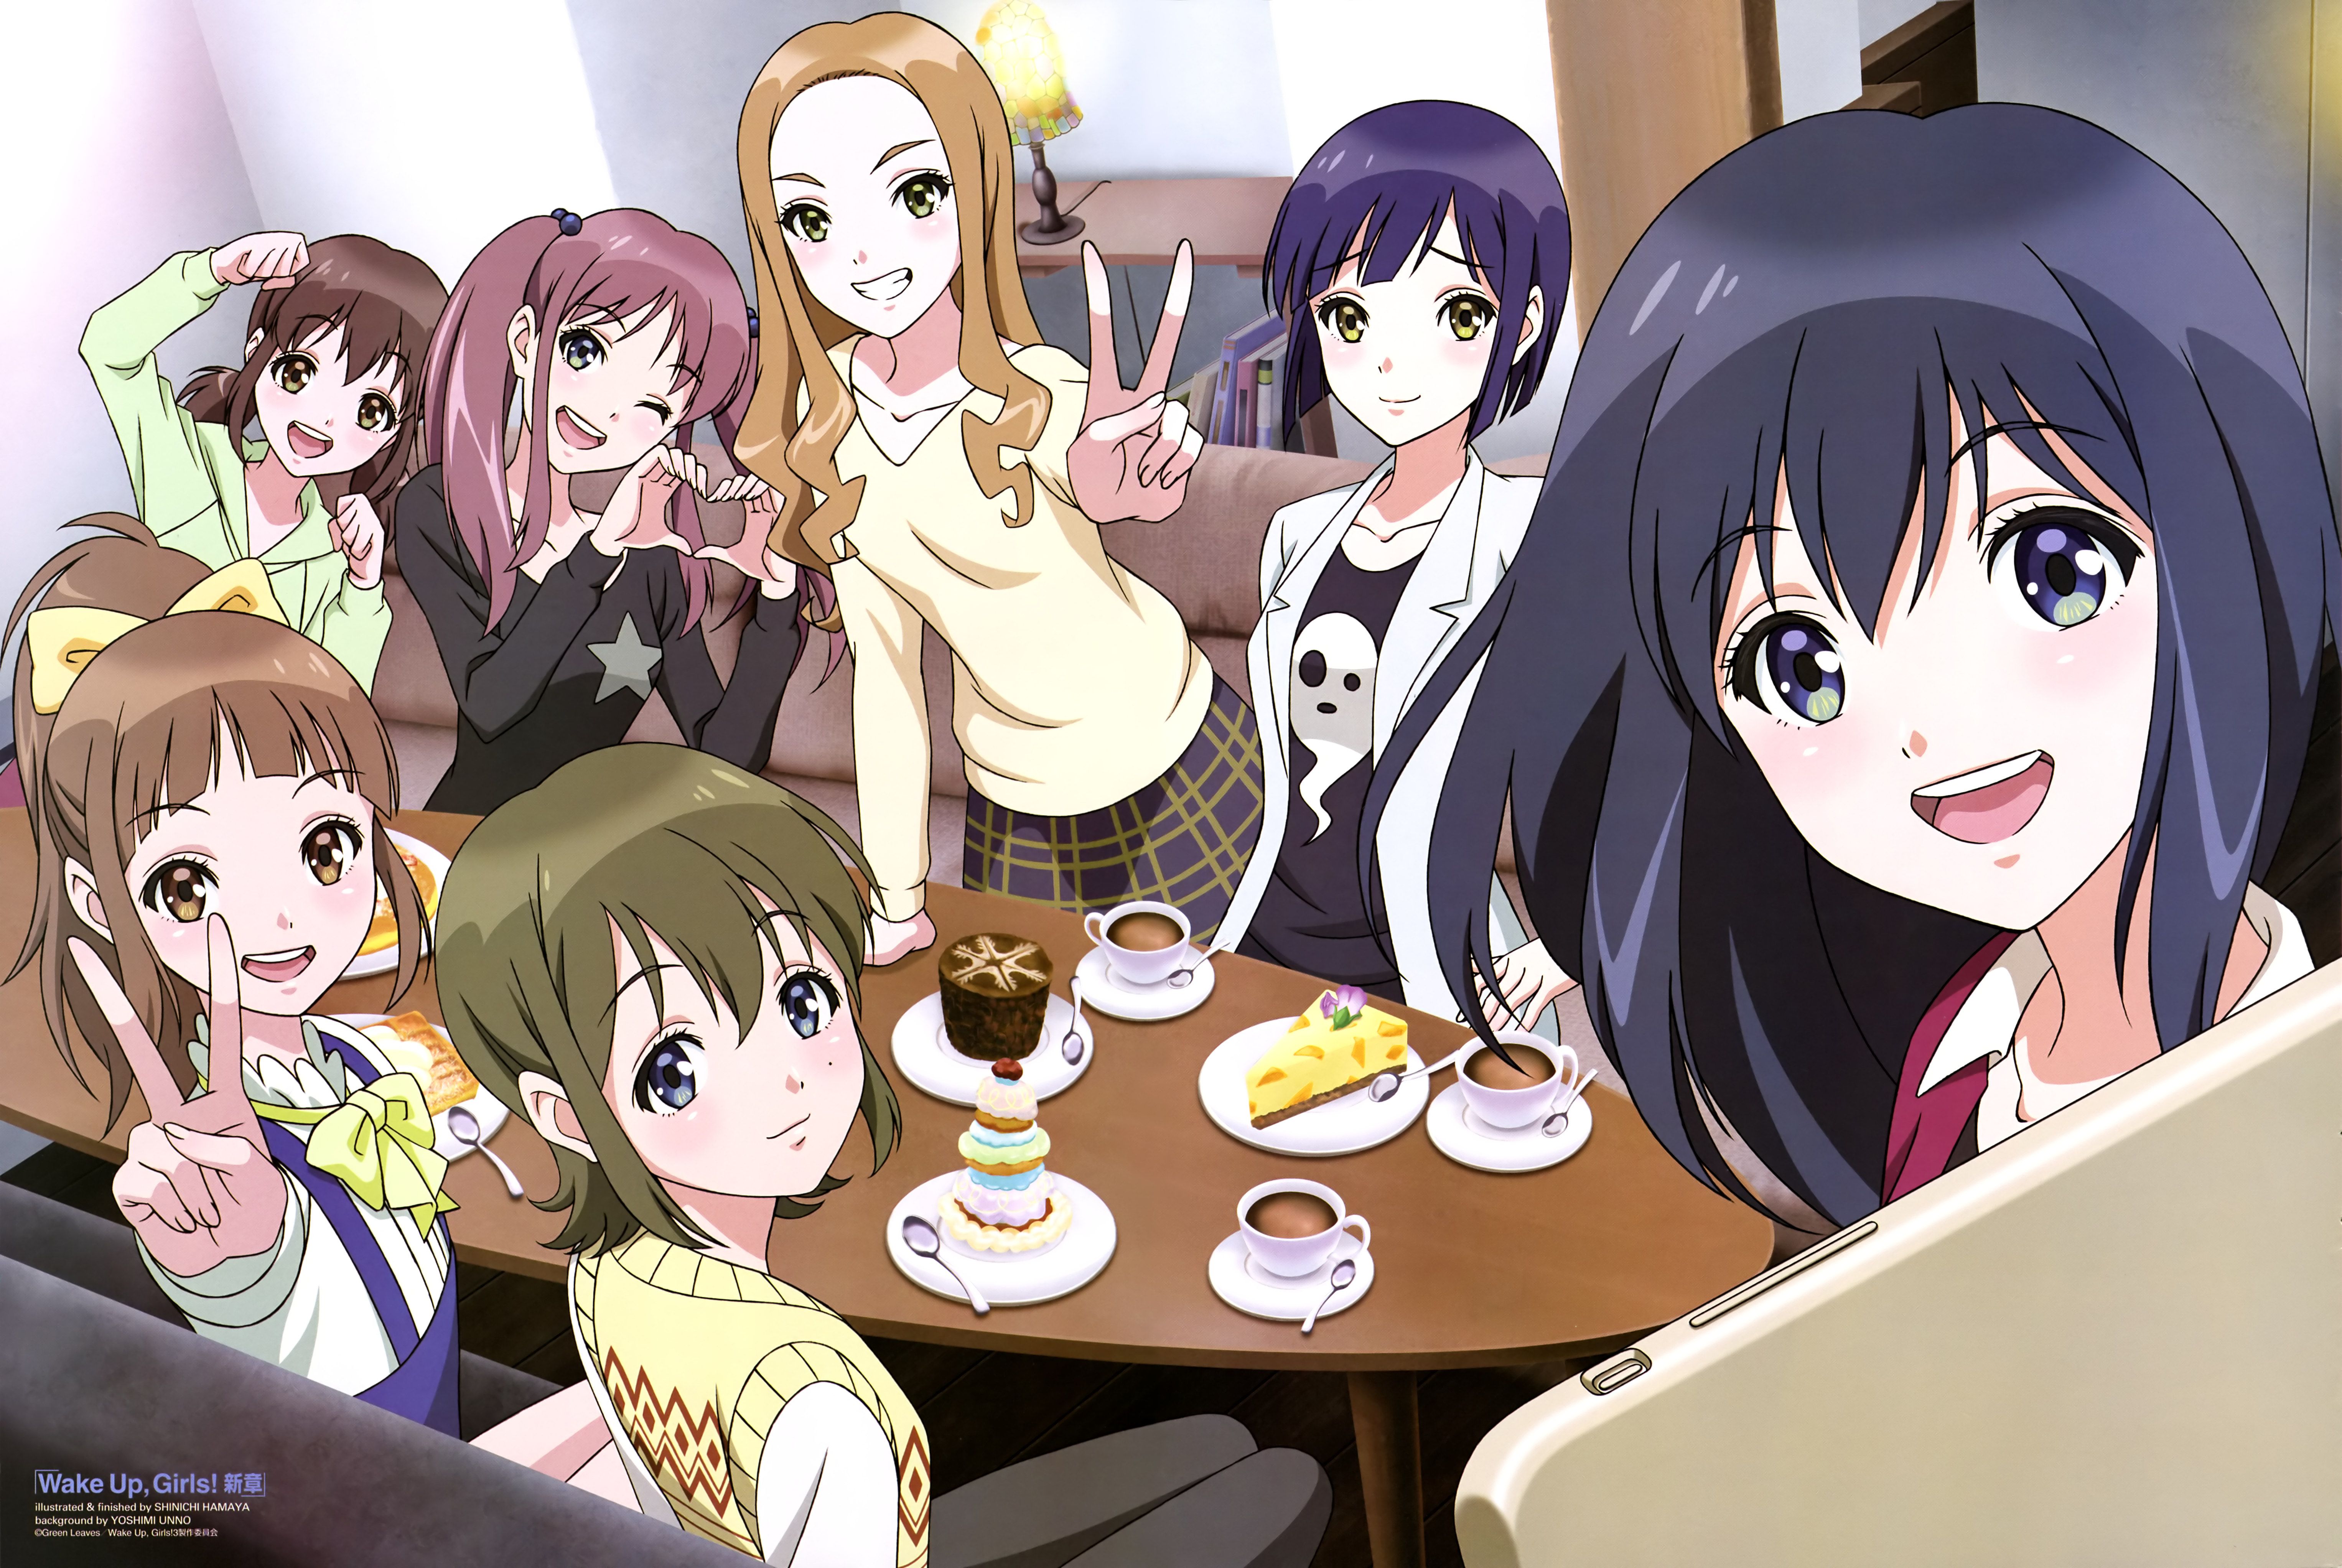 Shimada Mayu Up Girls! Anime Image Board